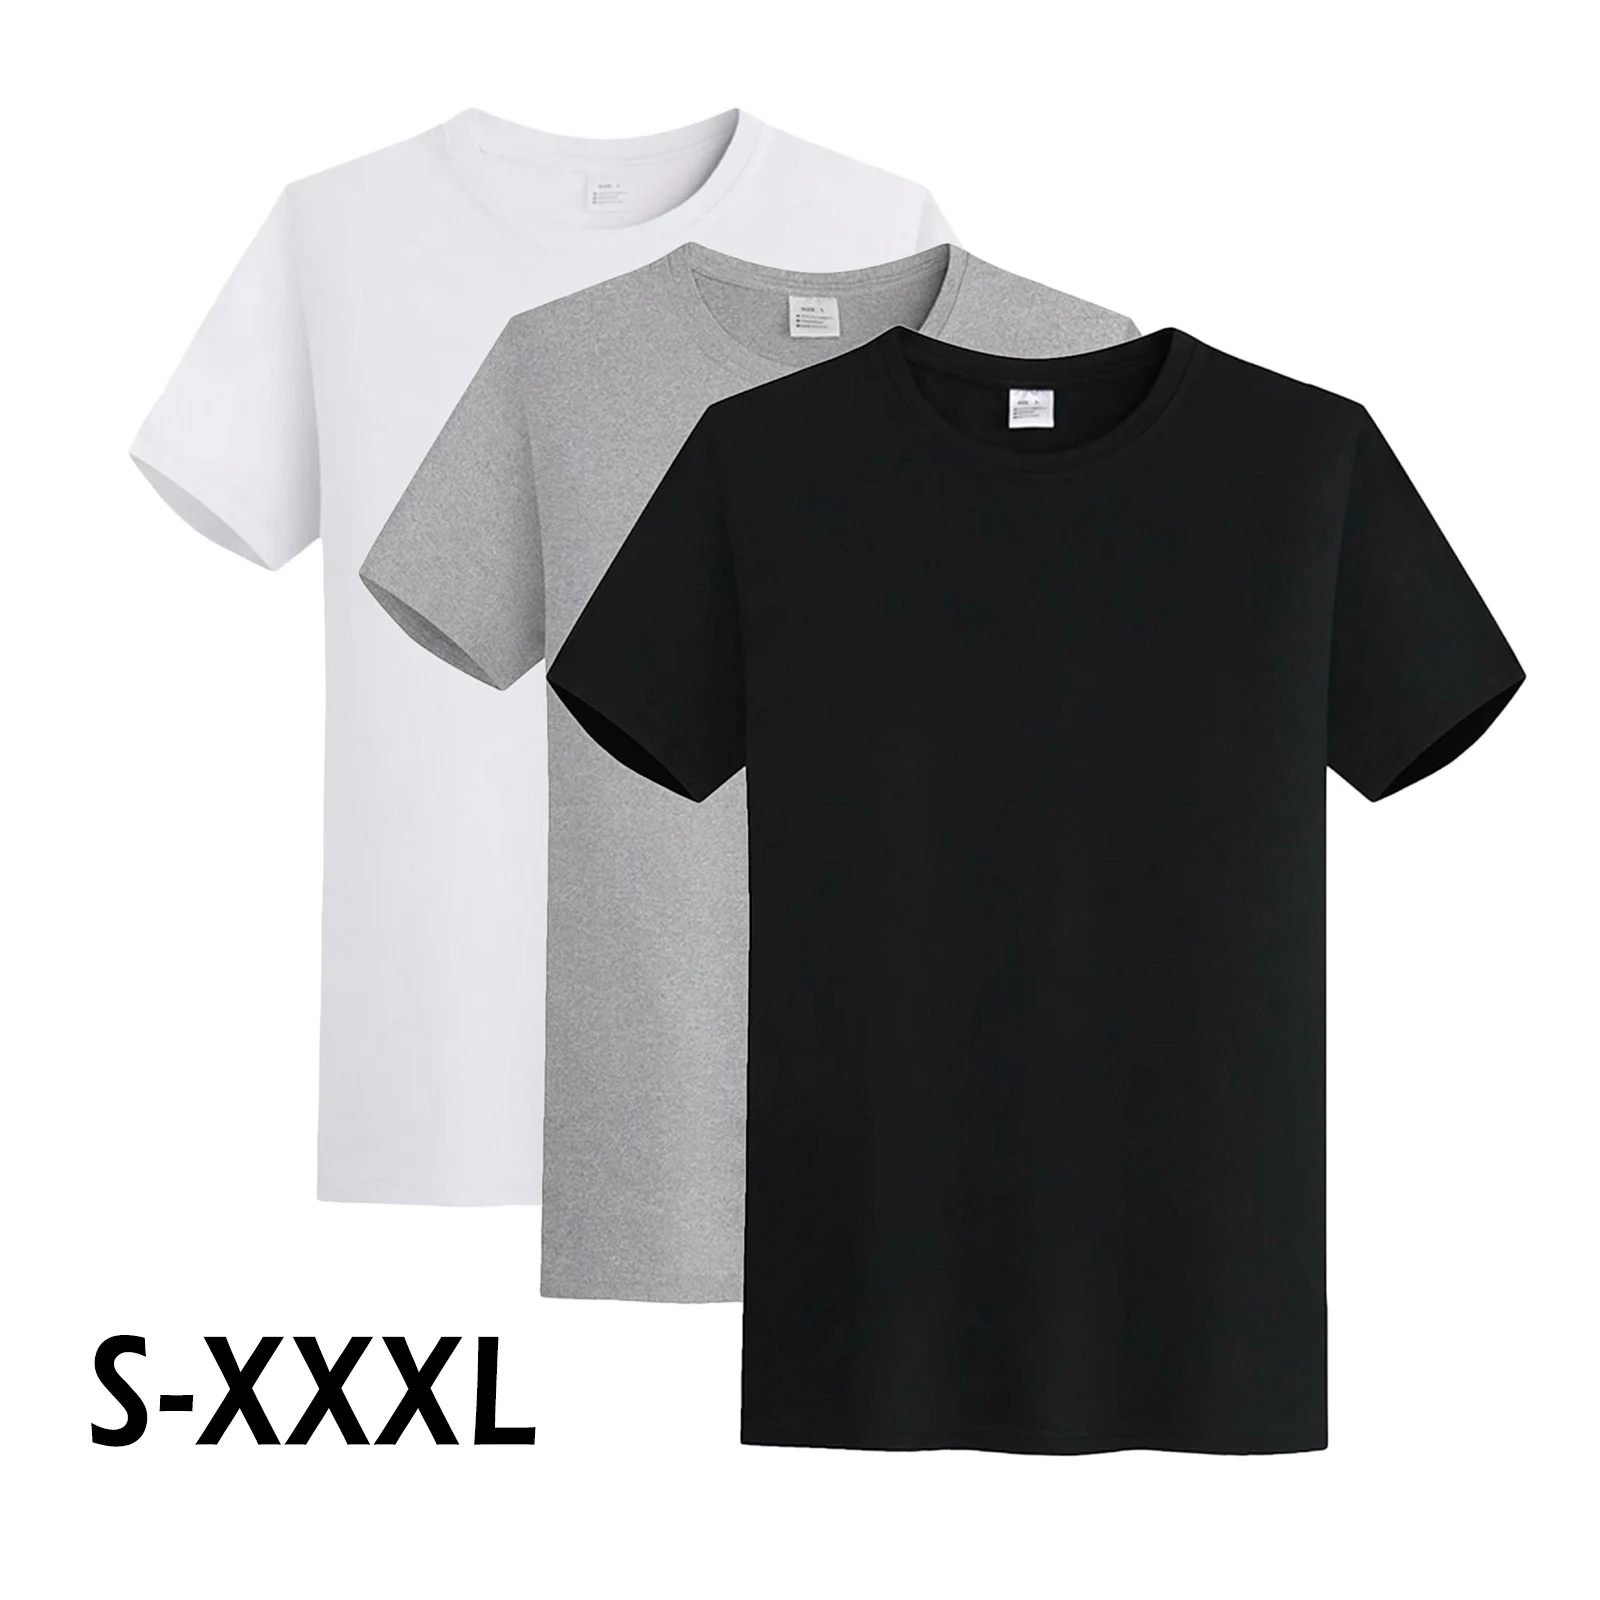 Man Summer Soft T shirts Unisex Women Short Sleeve Modal T-shirt white Basic Casual Tee Shirt Tops Crewneck